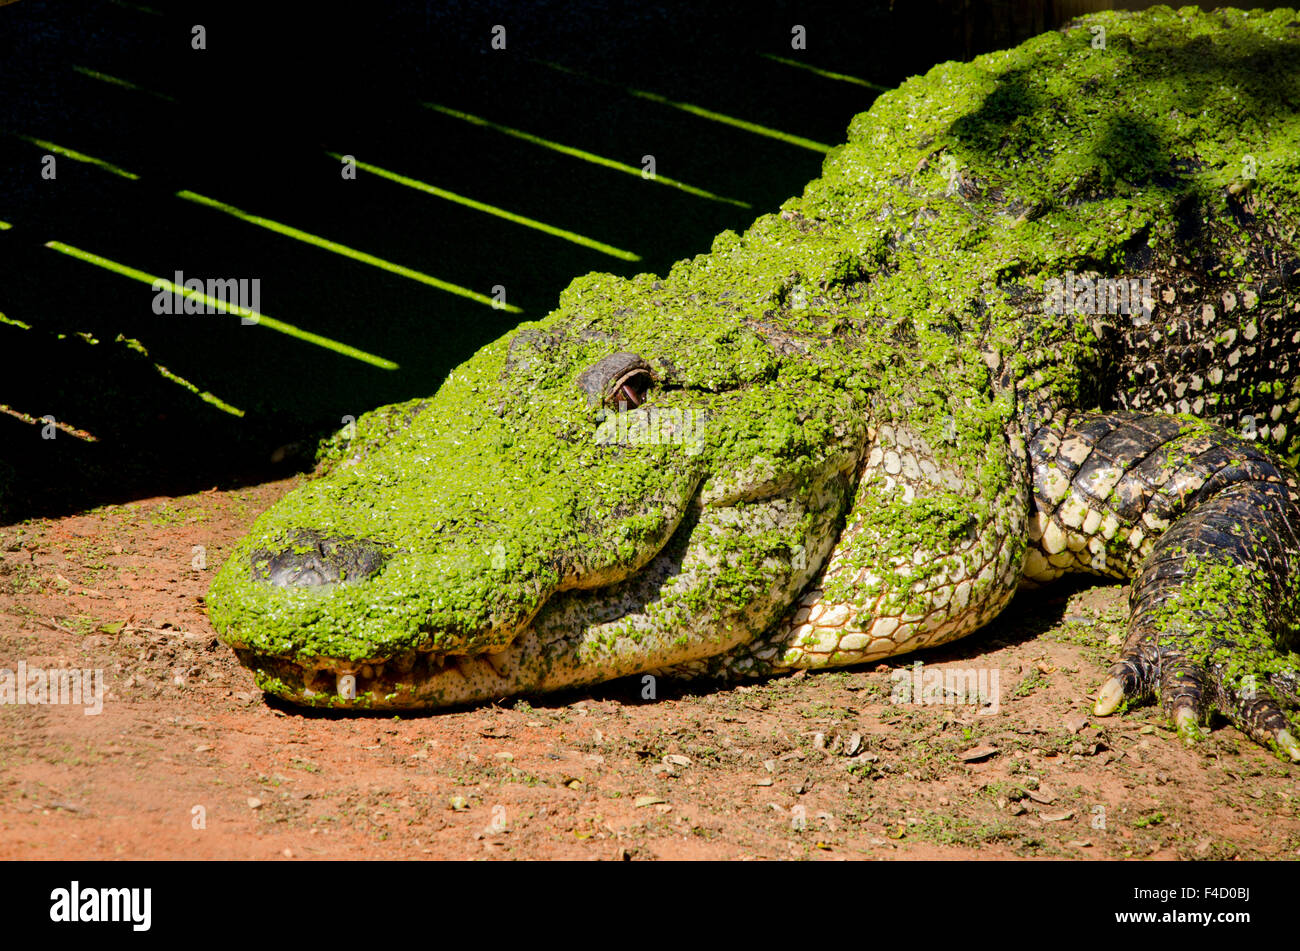 Australia, Broome. Malcolm Douglas Crocodile Park. Large American alligator (Alligator mississippiensis) covered in green duckweed (introduced species, Lemna minuta). Stock Photo